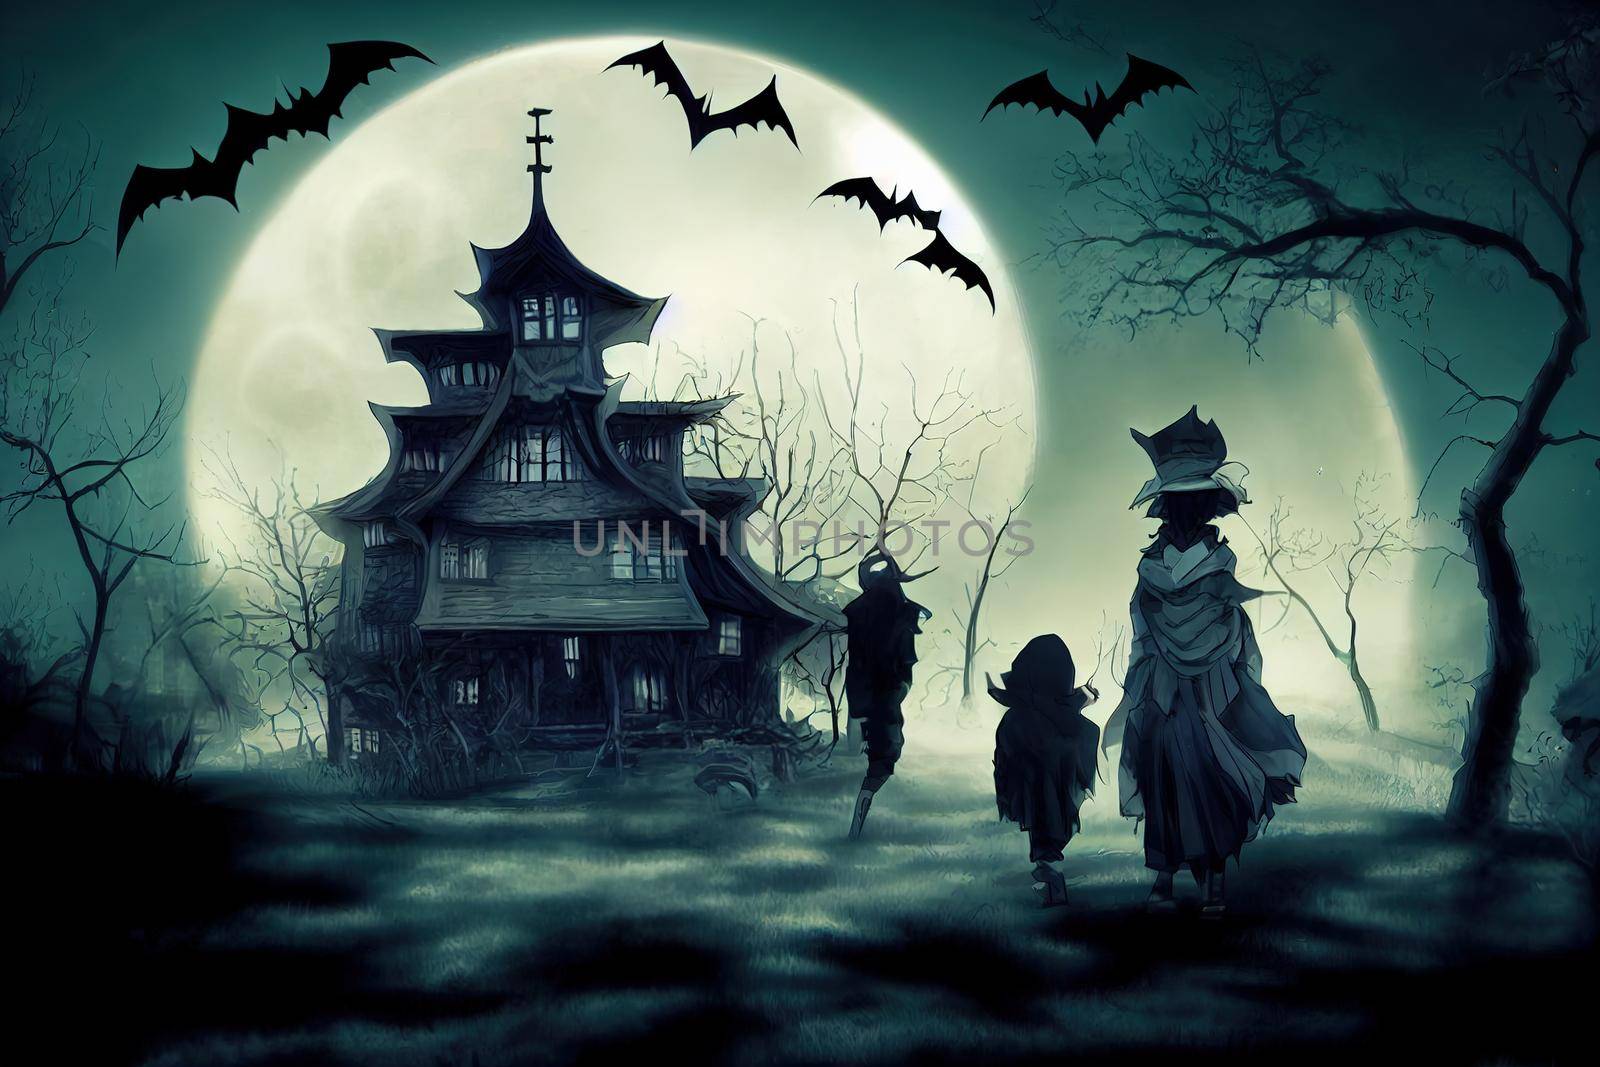 anime style spooky halloween 1. High quality 3d illustration